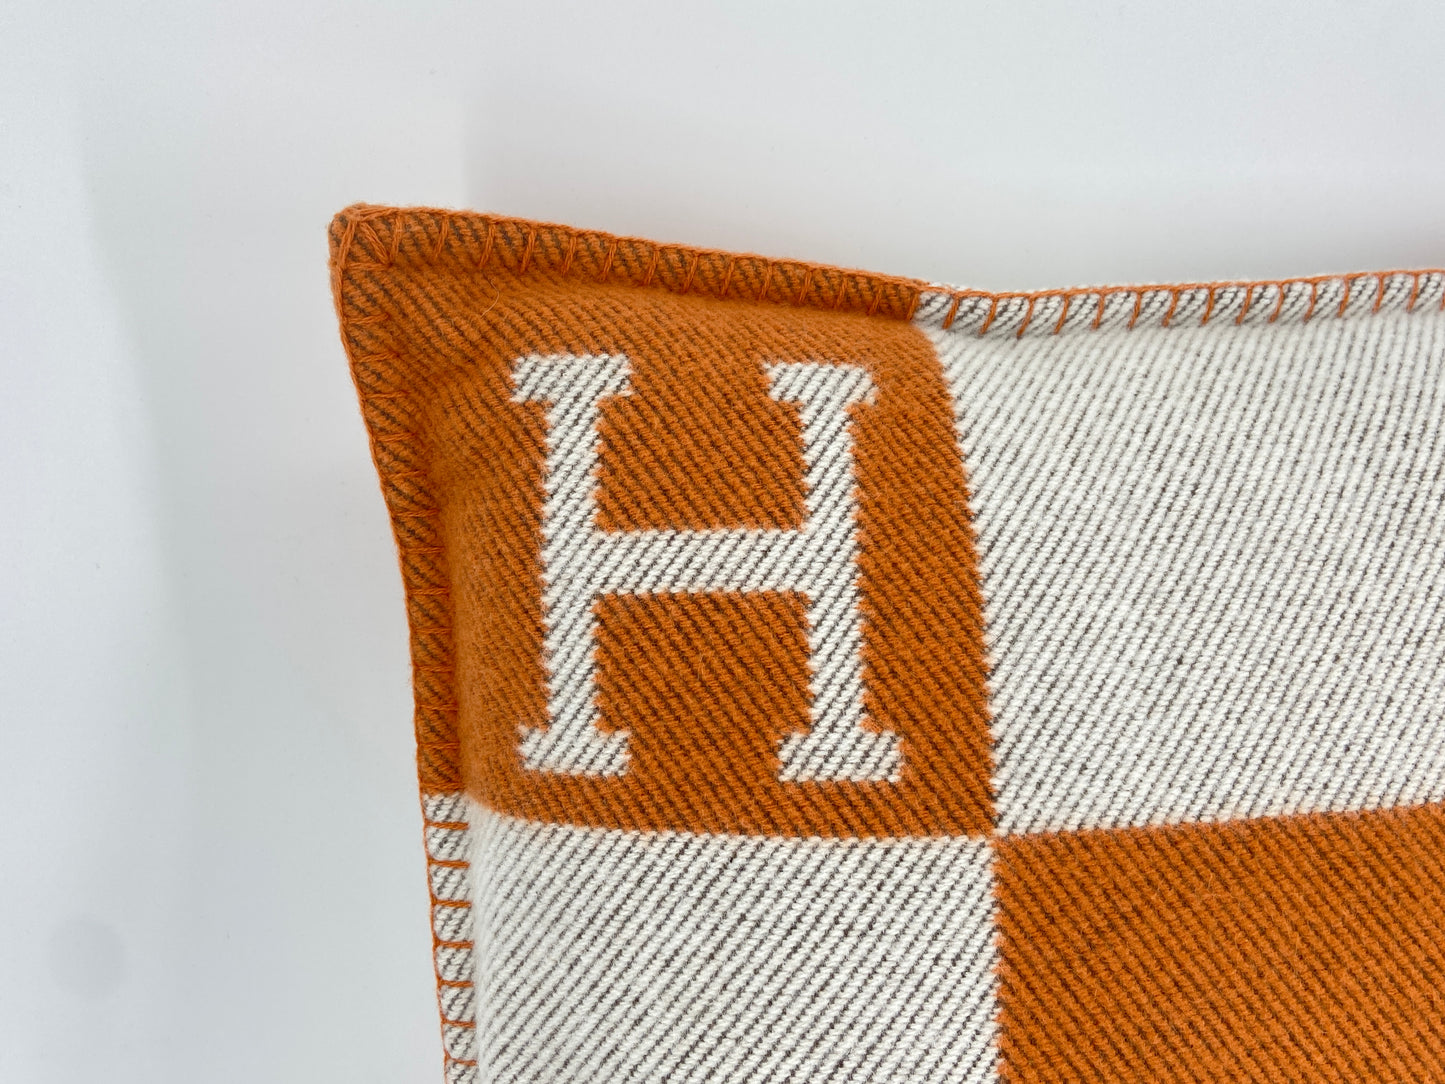 Hermès Avalon Pillow Orange